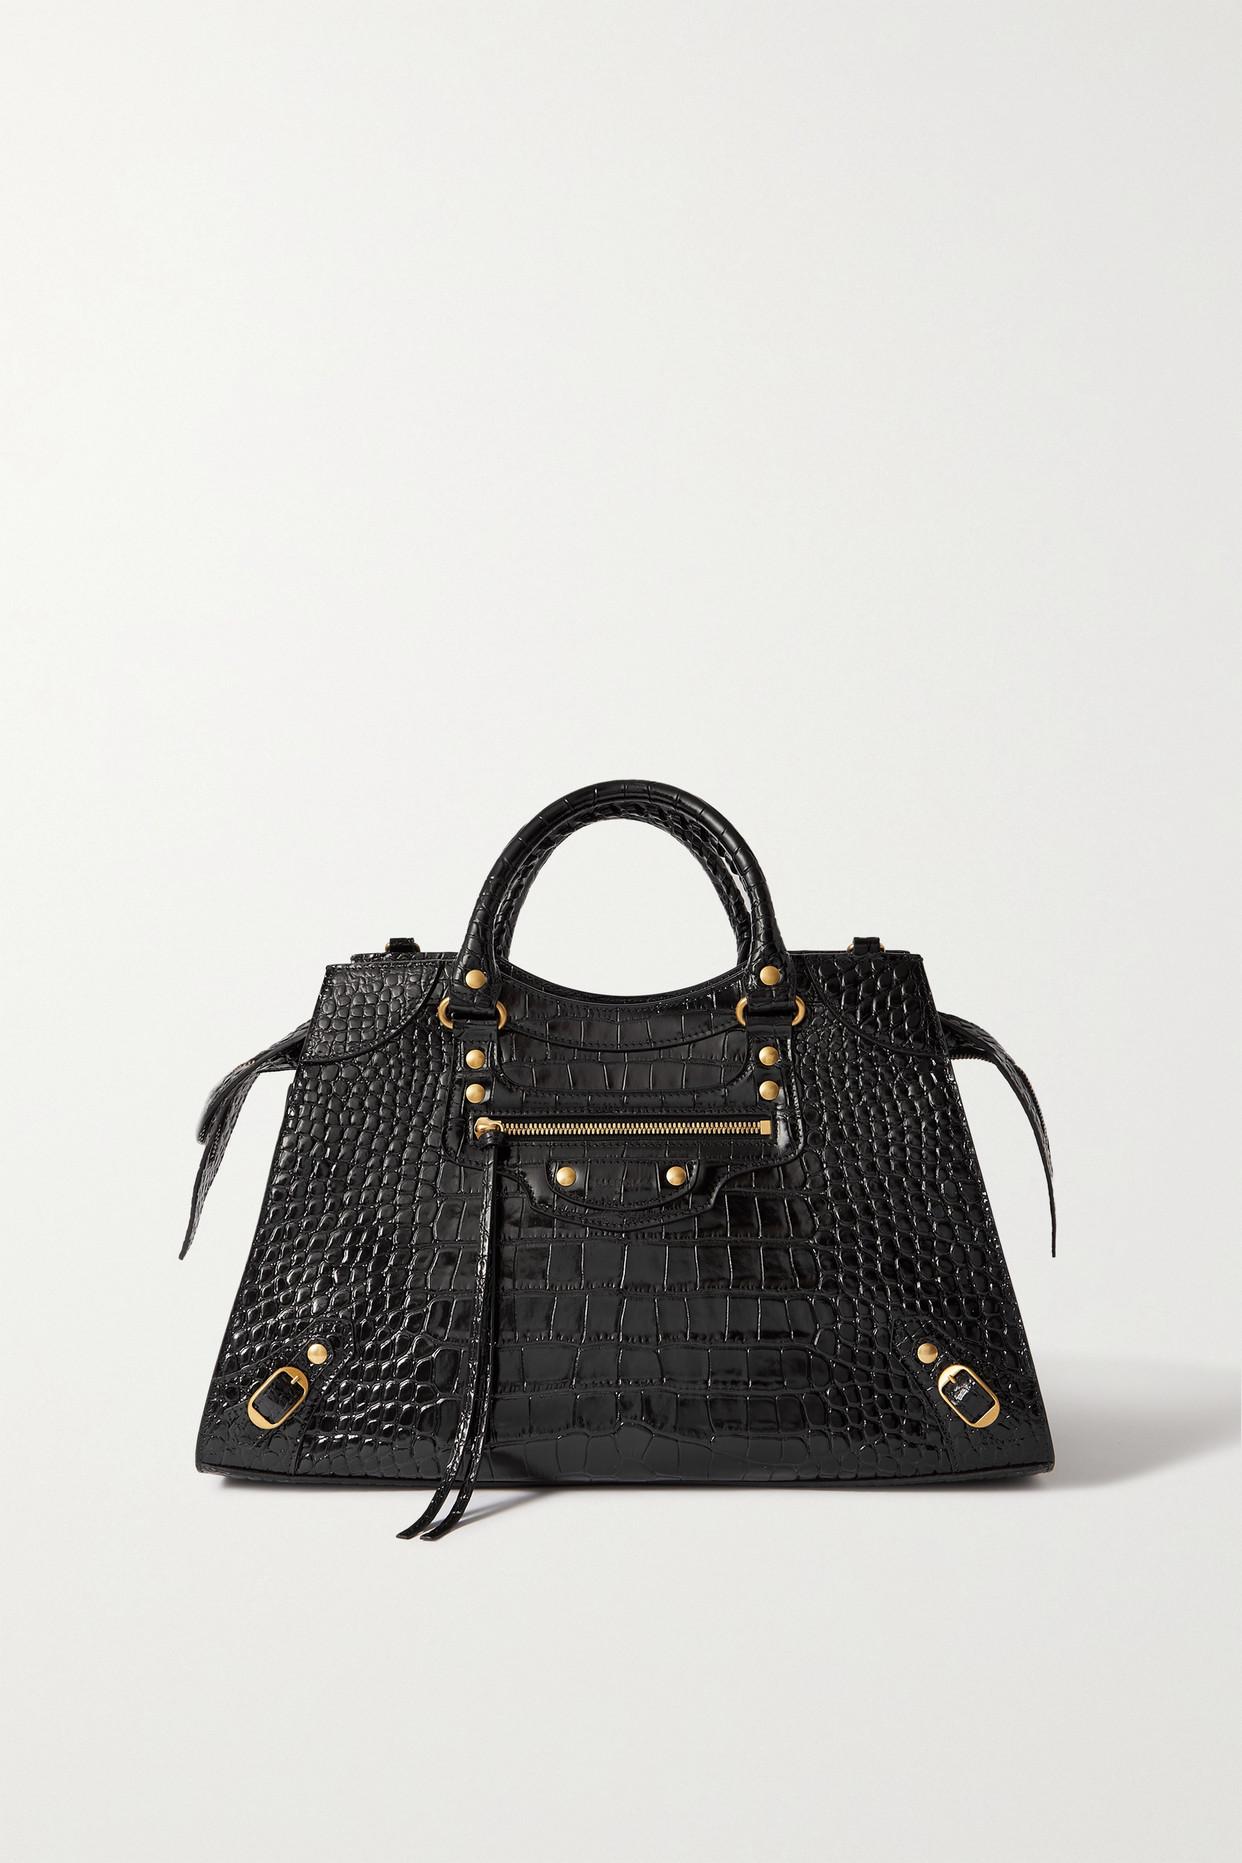 Balenciaga Neo Classic City Medium Croc-effect Patent-leather Tote in Black  | Lyst